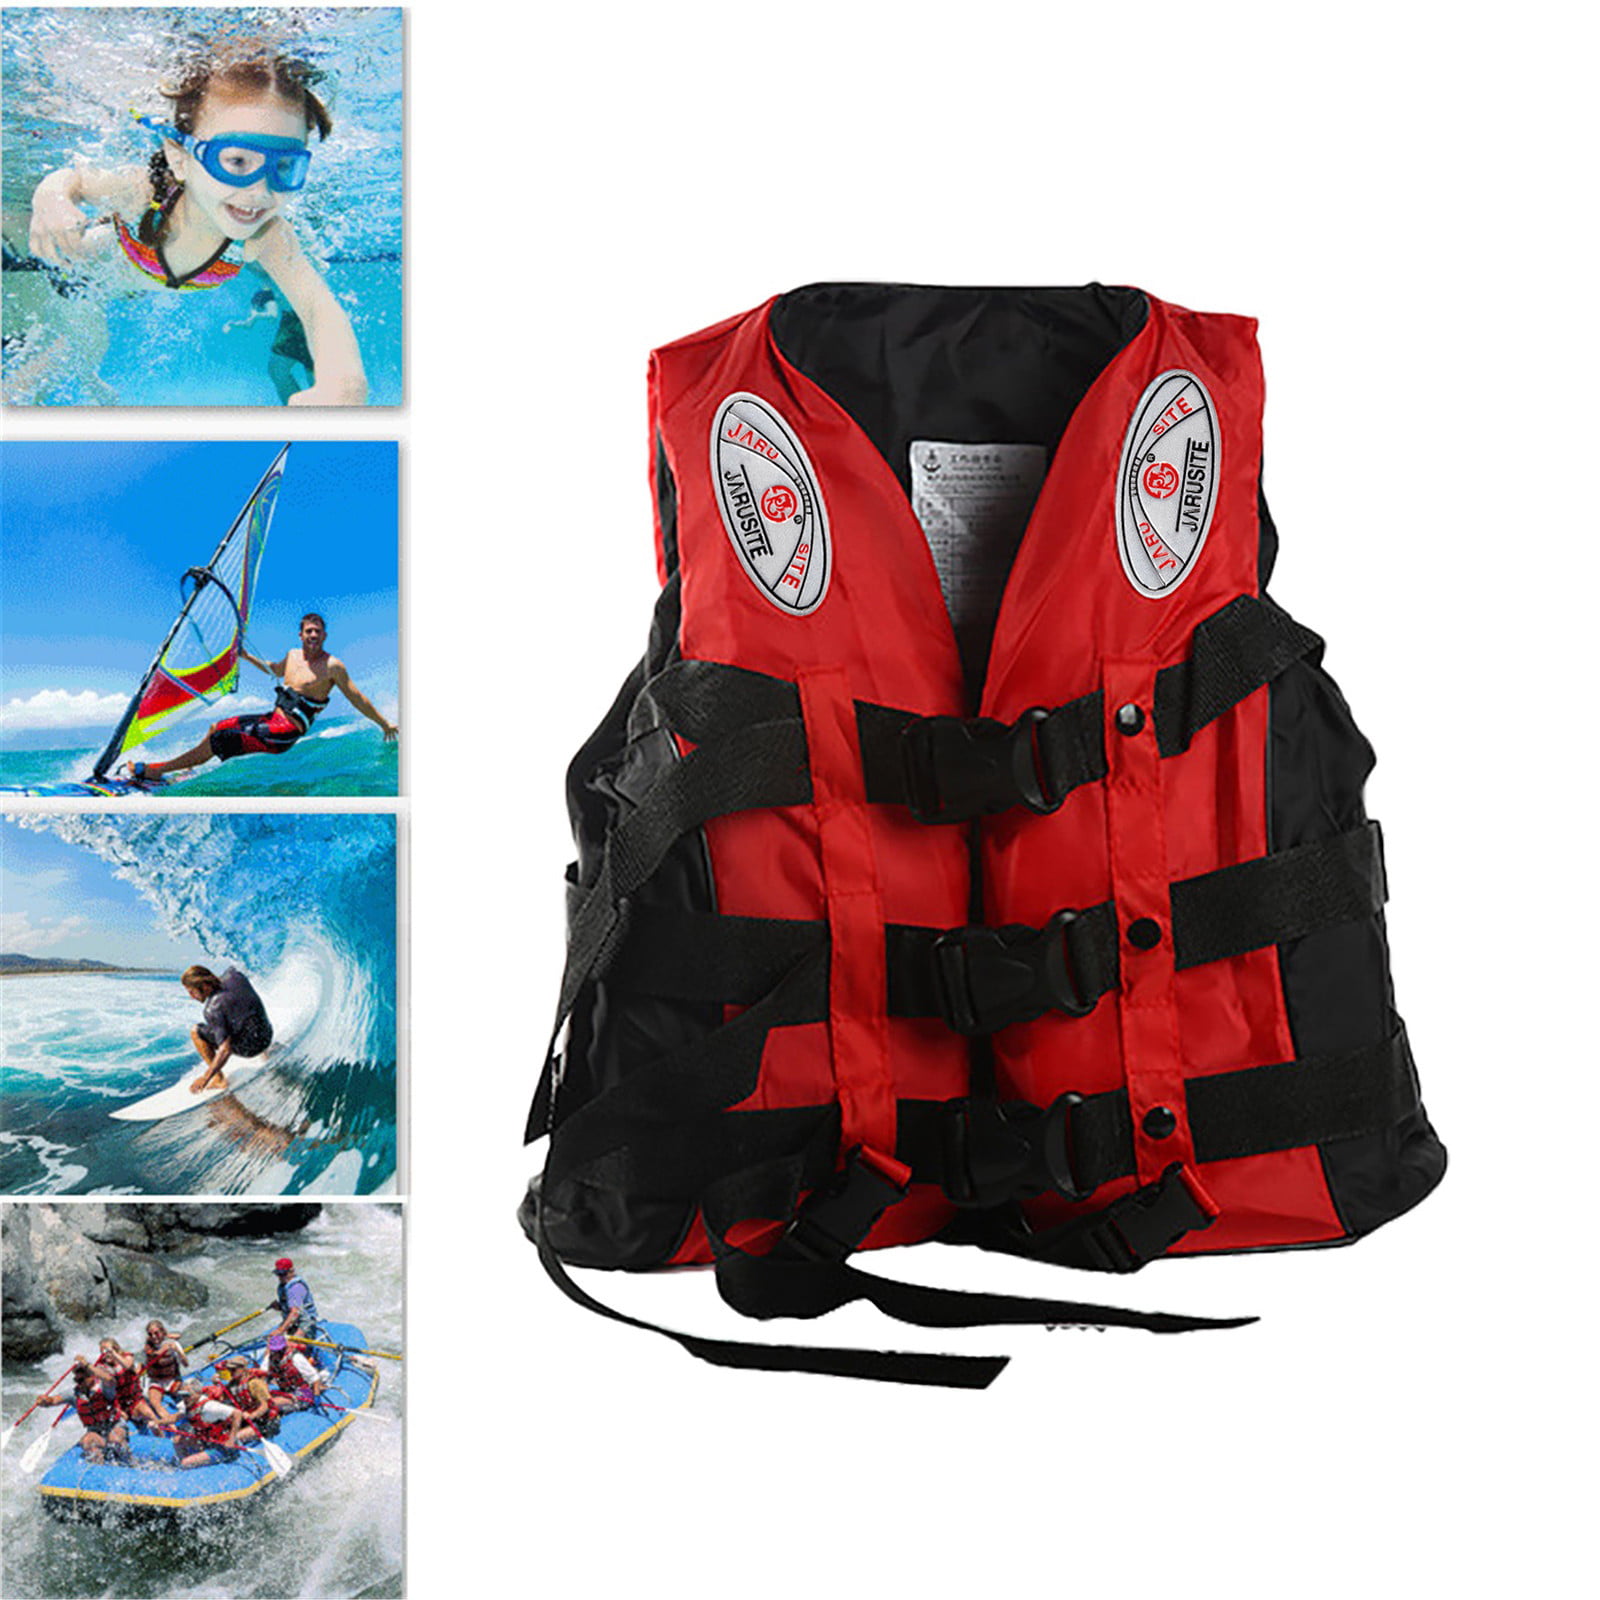 Adult Kids Life Jacket Kayak Ski Buoyancy Aid Vest Sailing Fishing Watersport US 